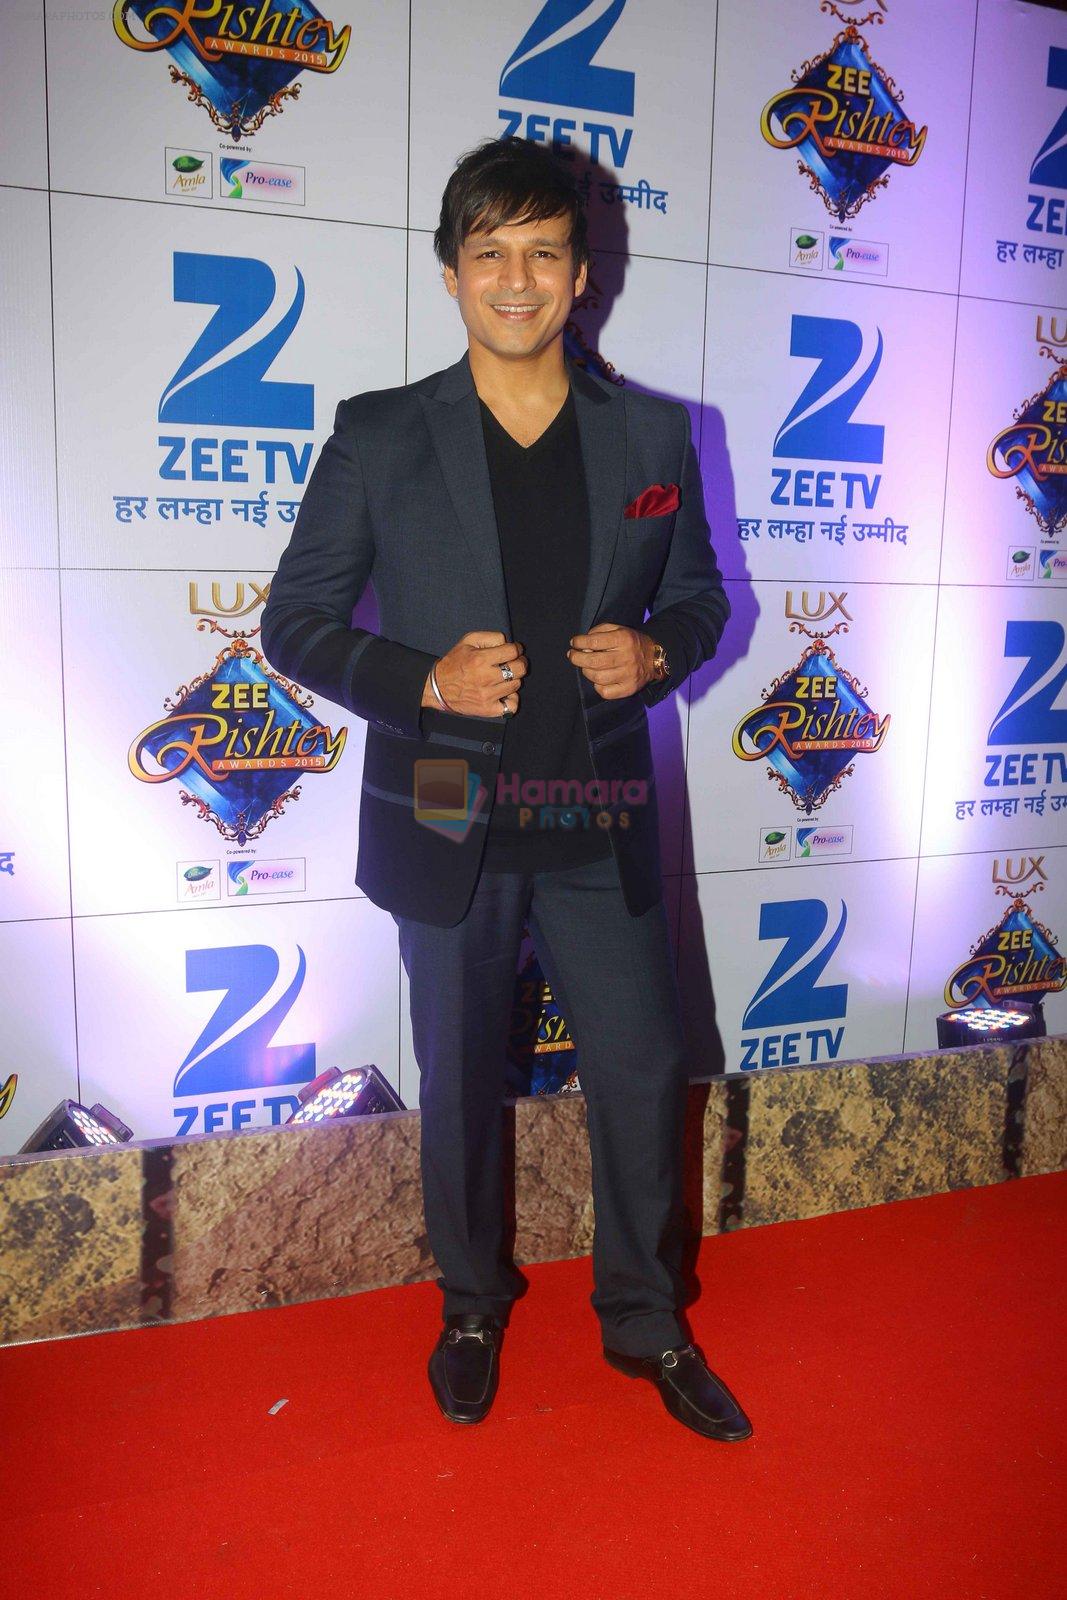 Vivek Oberoi at Zee Rishtey Awards in Mumbai on 21st Nov 2015